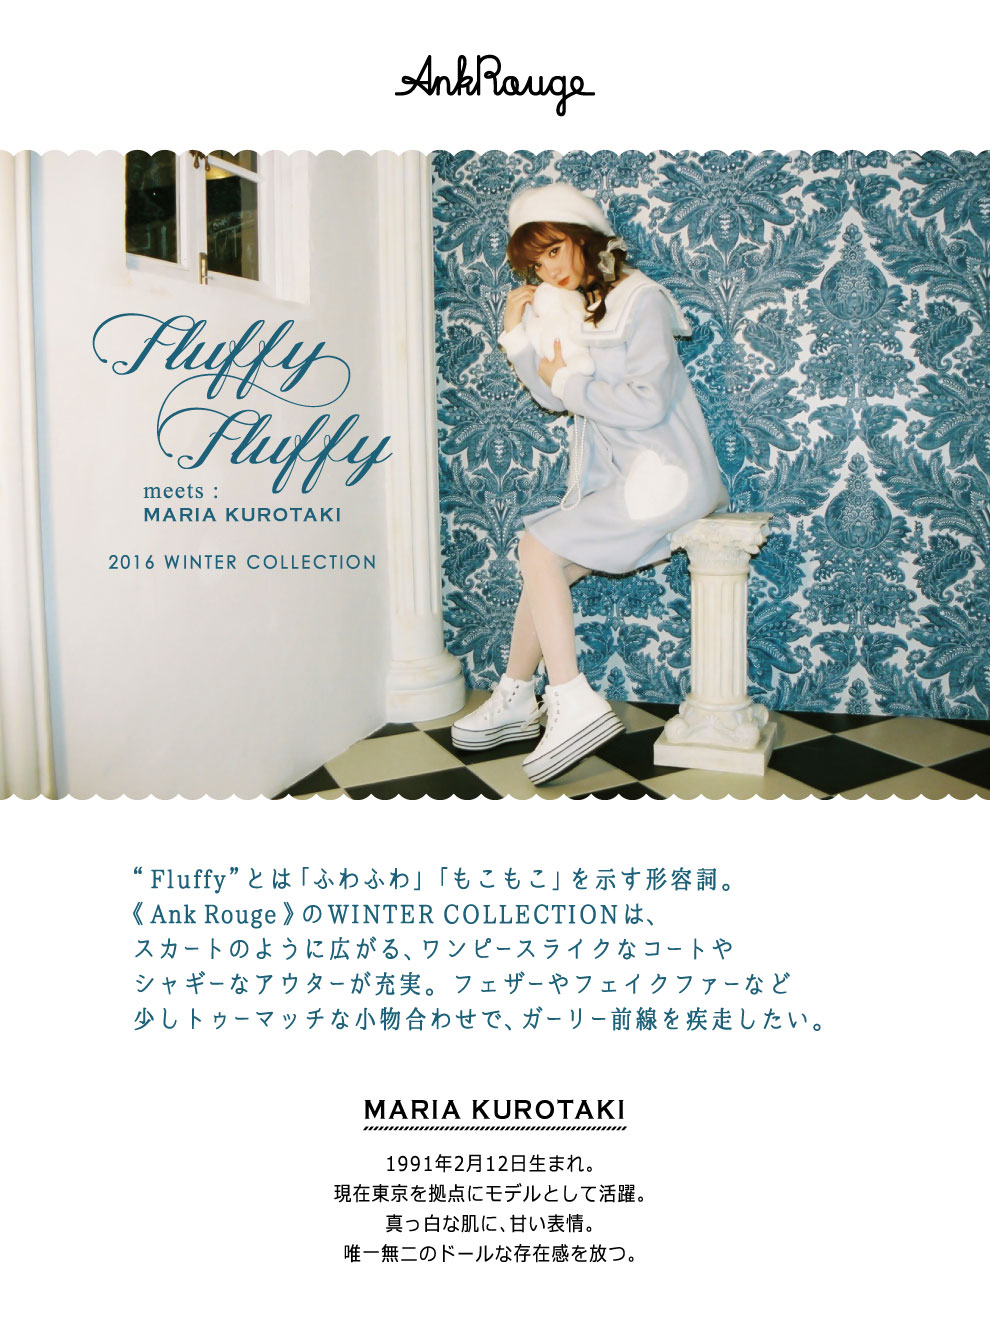 Fluffy Fluffy - meets:MARIA KUROTAKI -2016 WINTER COLLECTION